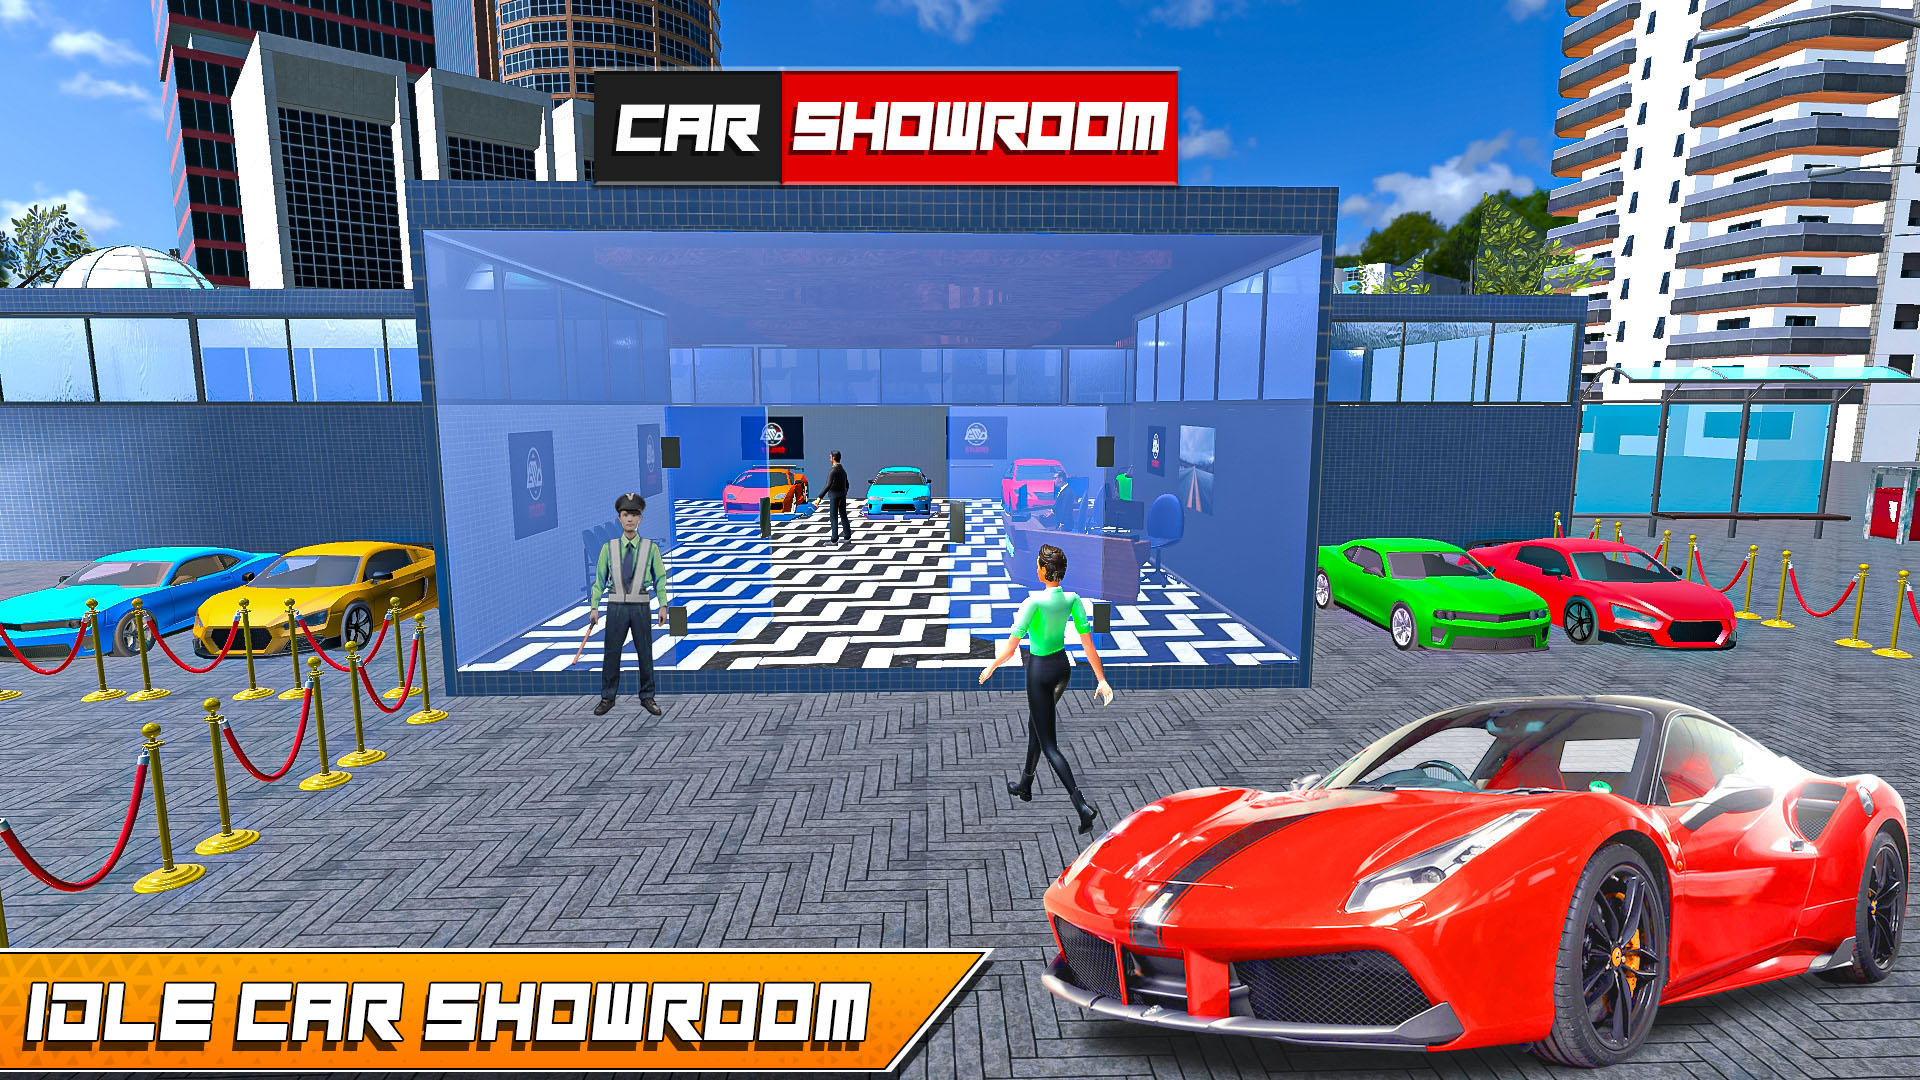 Screenshot 1 of Car dealer tycoon Sim Games 3.3